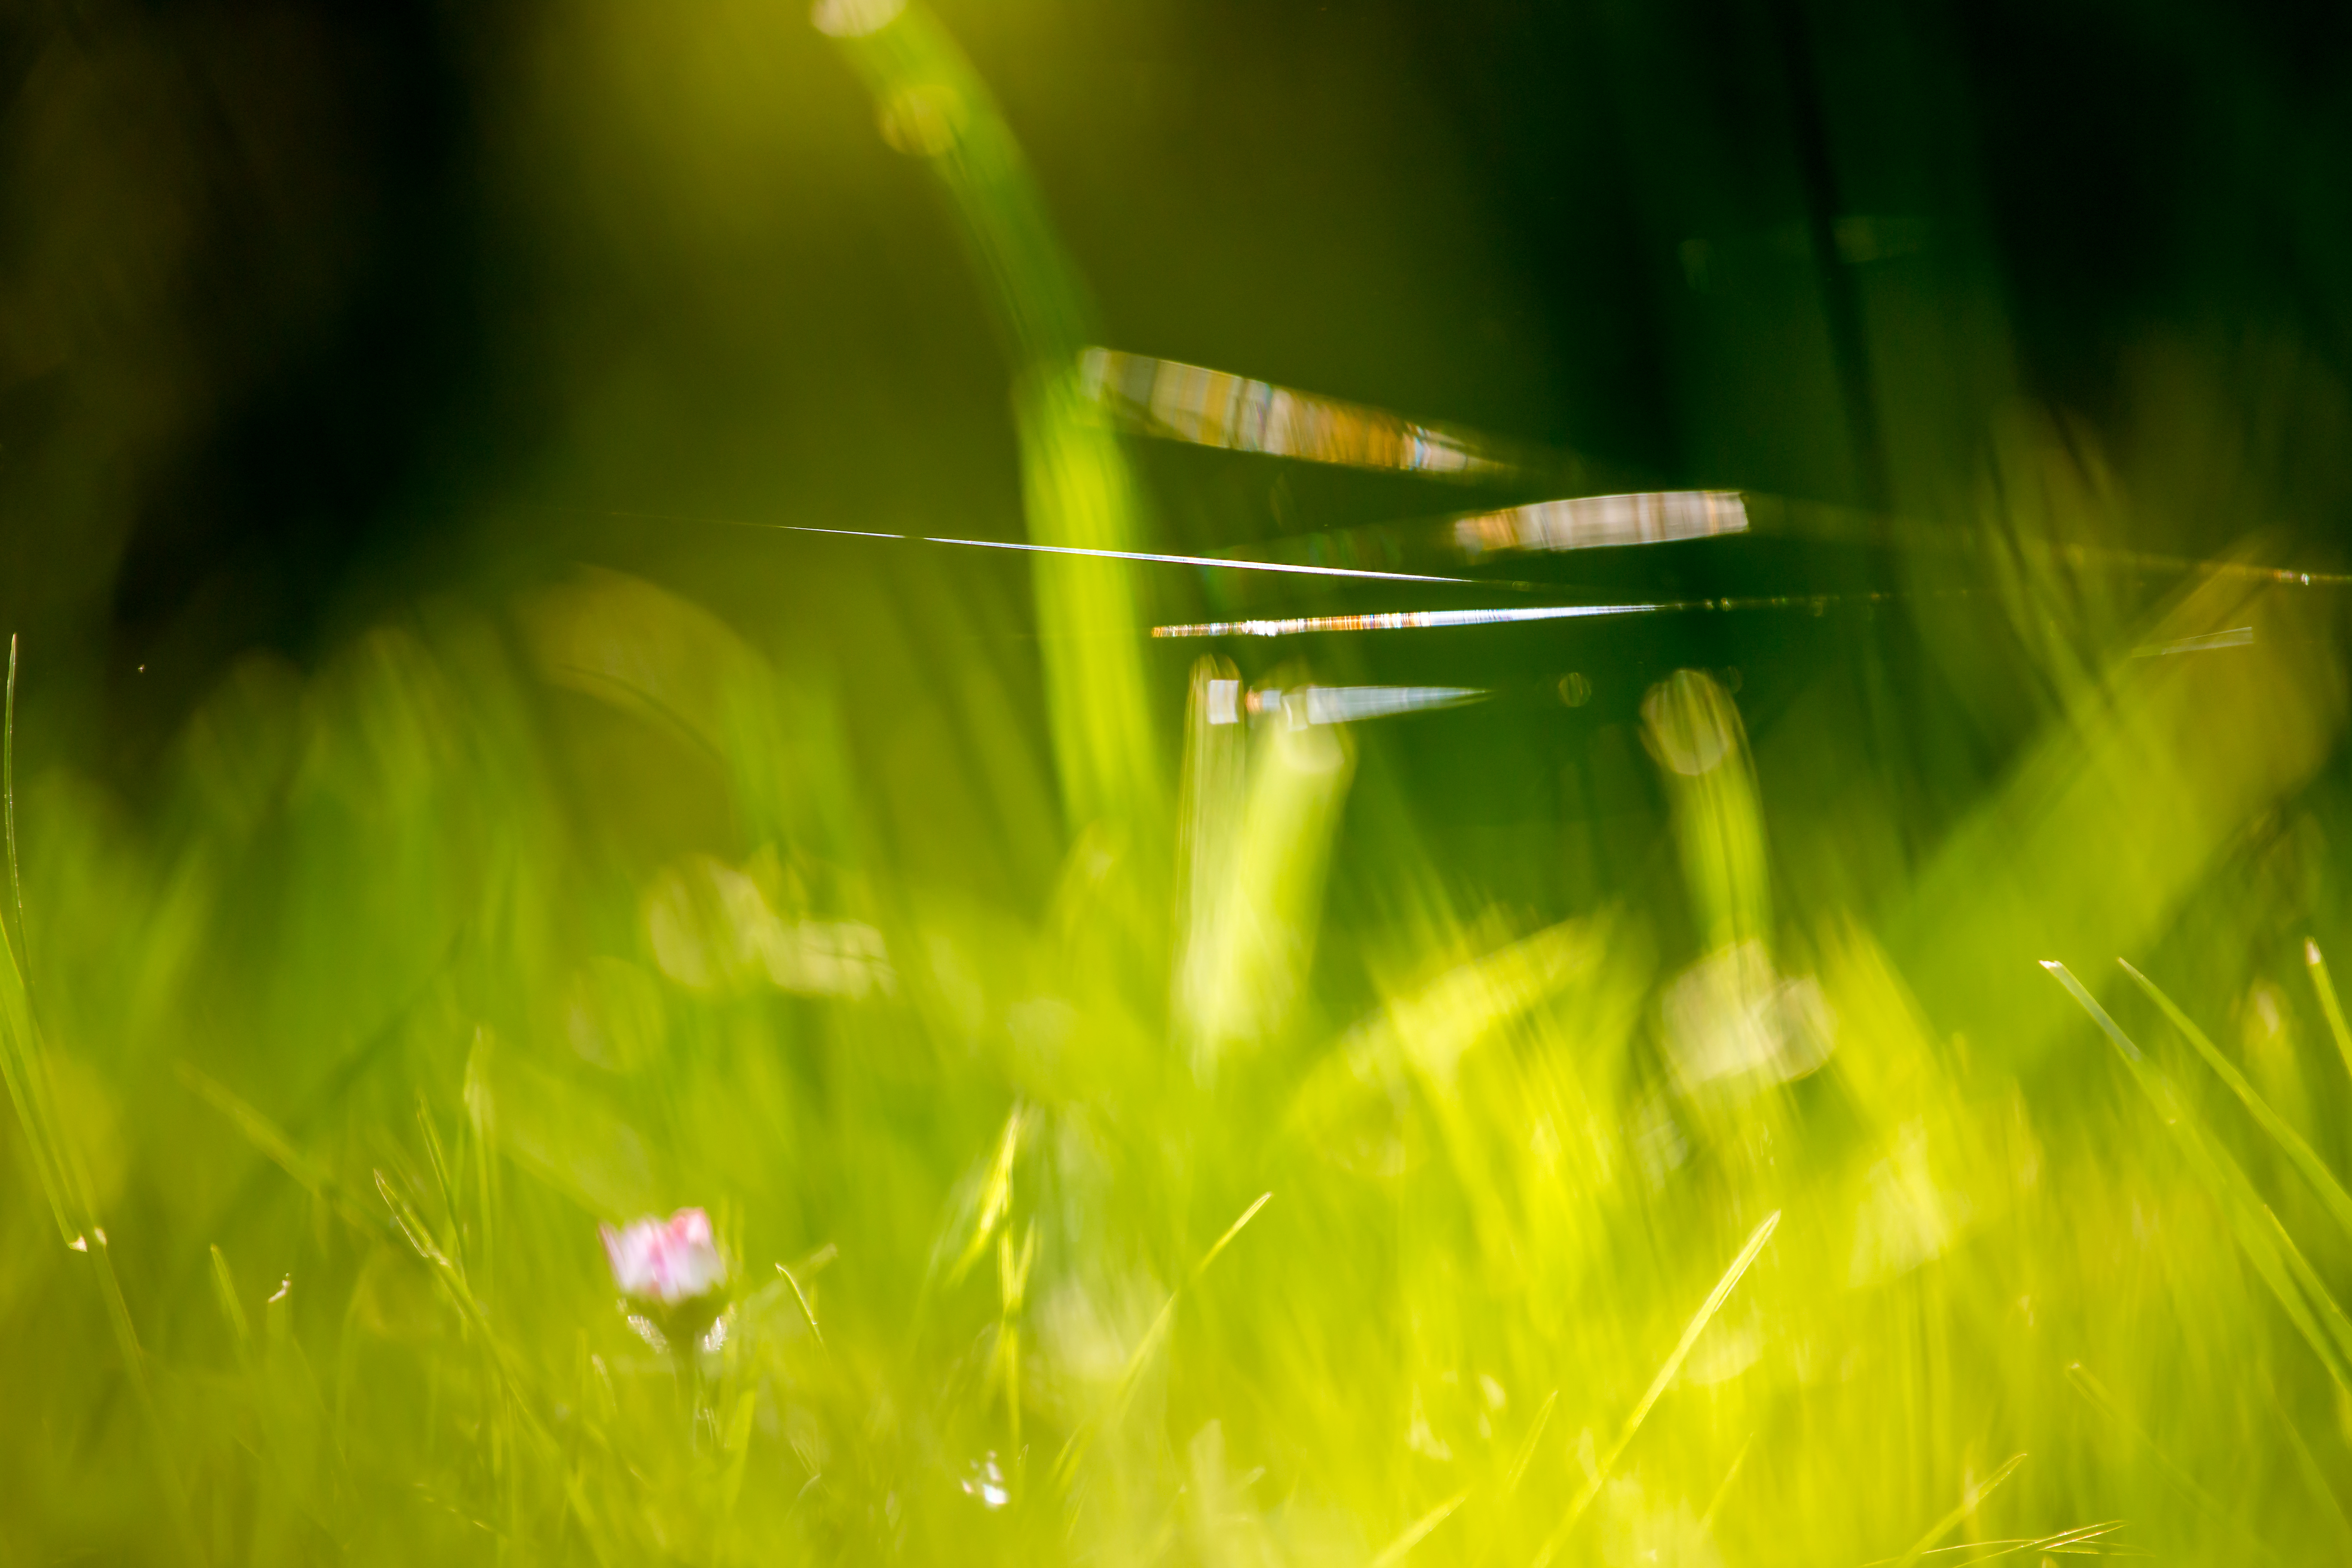 12 Beautiful Green Grass Field HD Wallpapers | OSXDaily